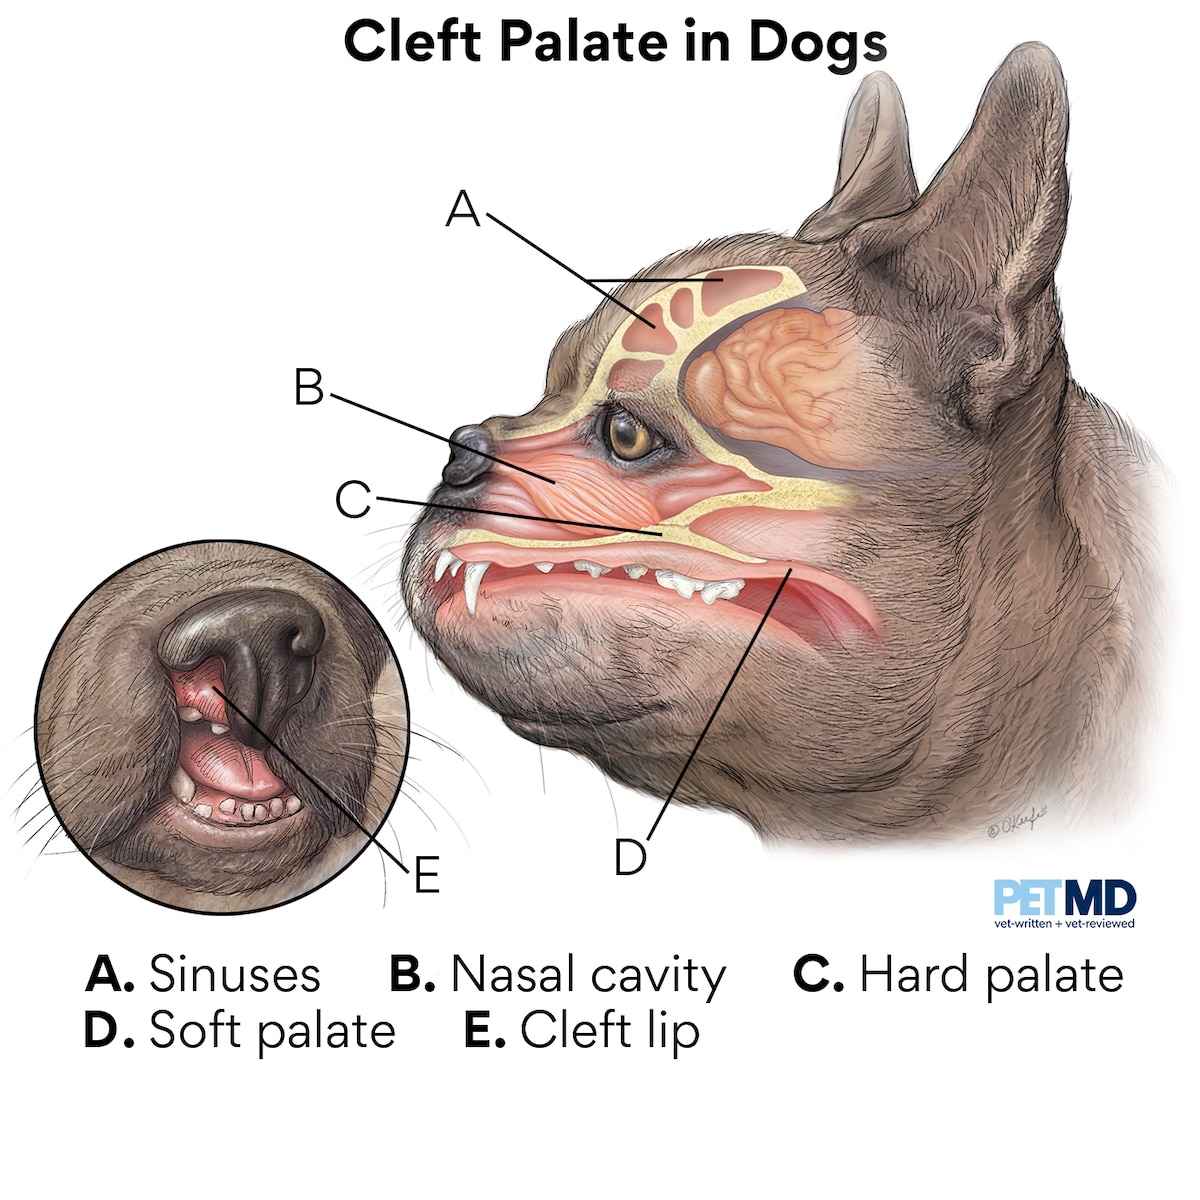 Dog cleft palate